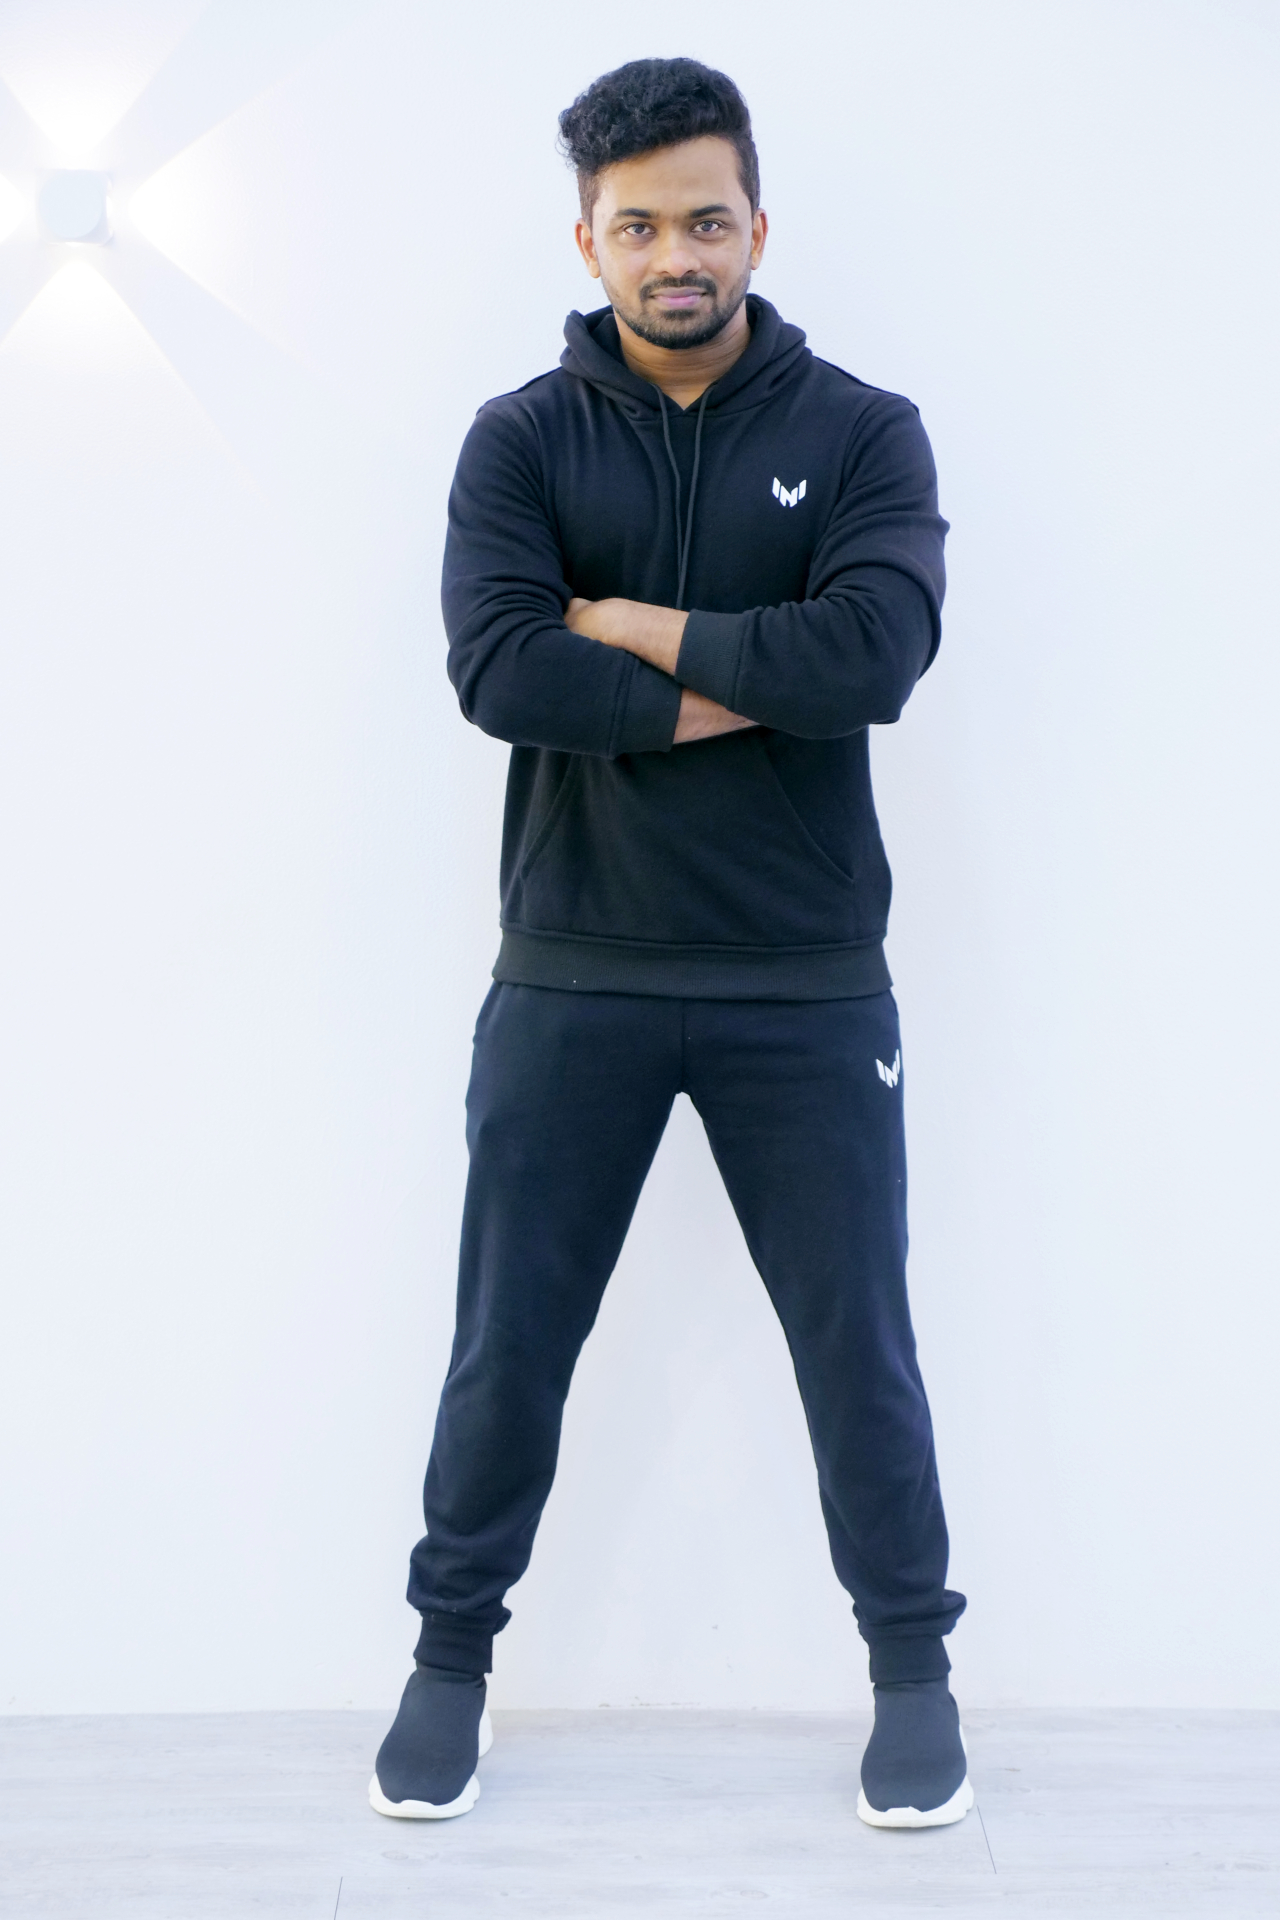 Ajay Shivan, Artist Turned Entrepreneur, Brings India’s First Dancewear Brand